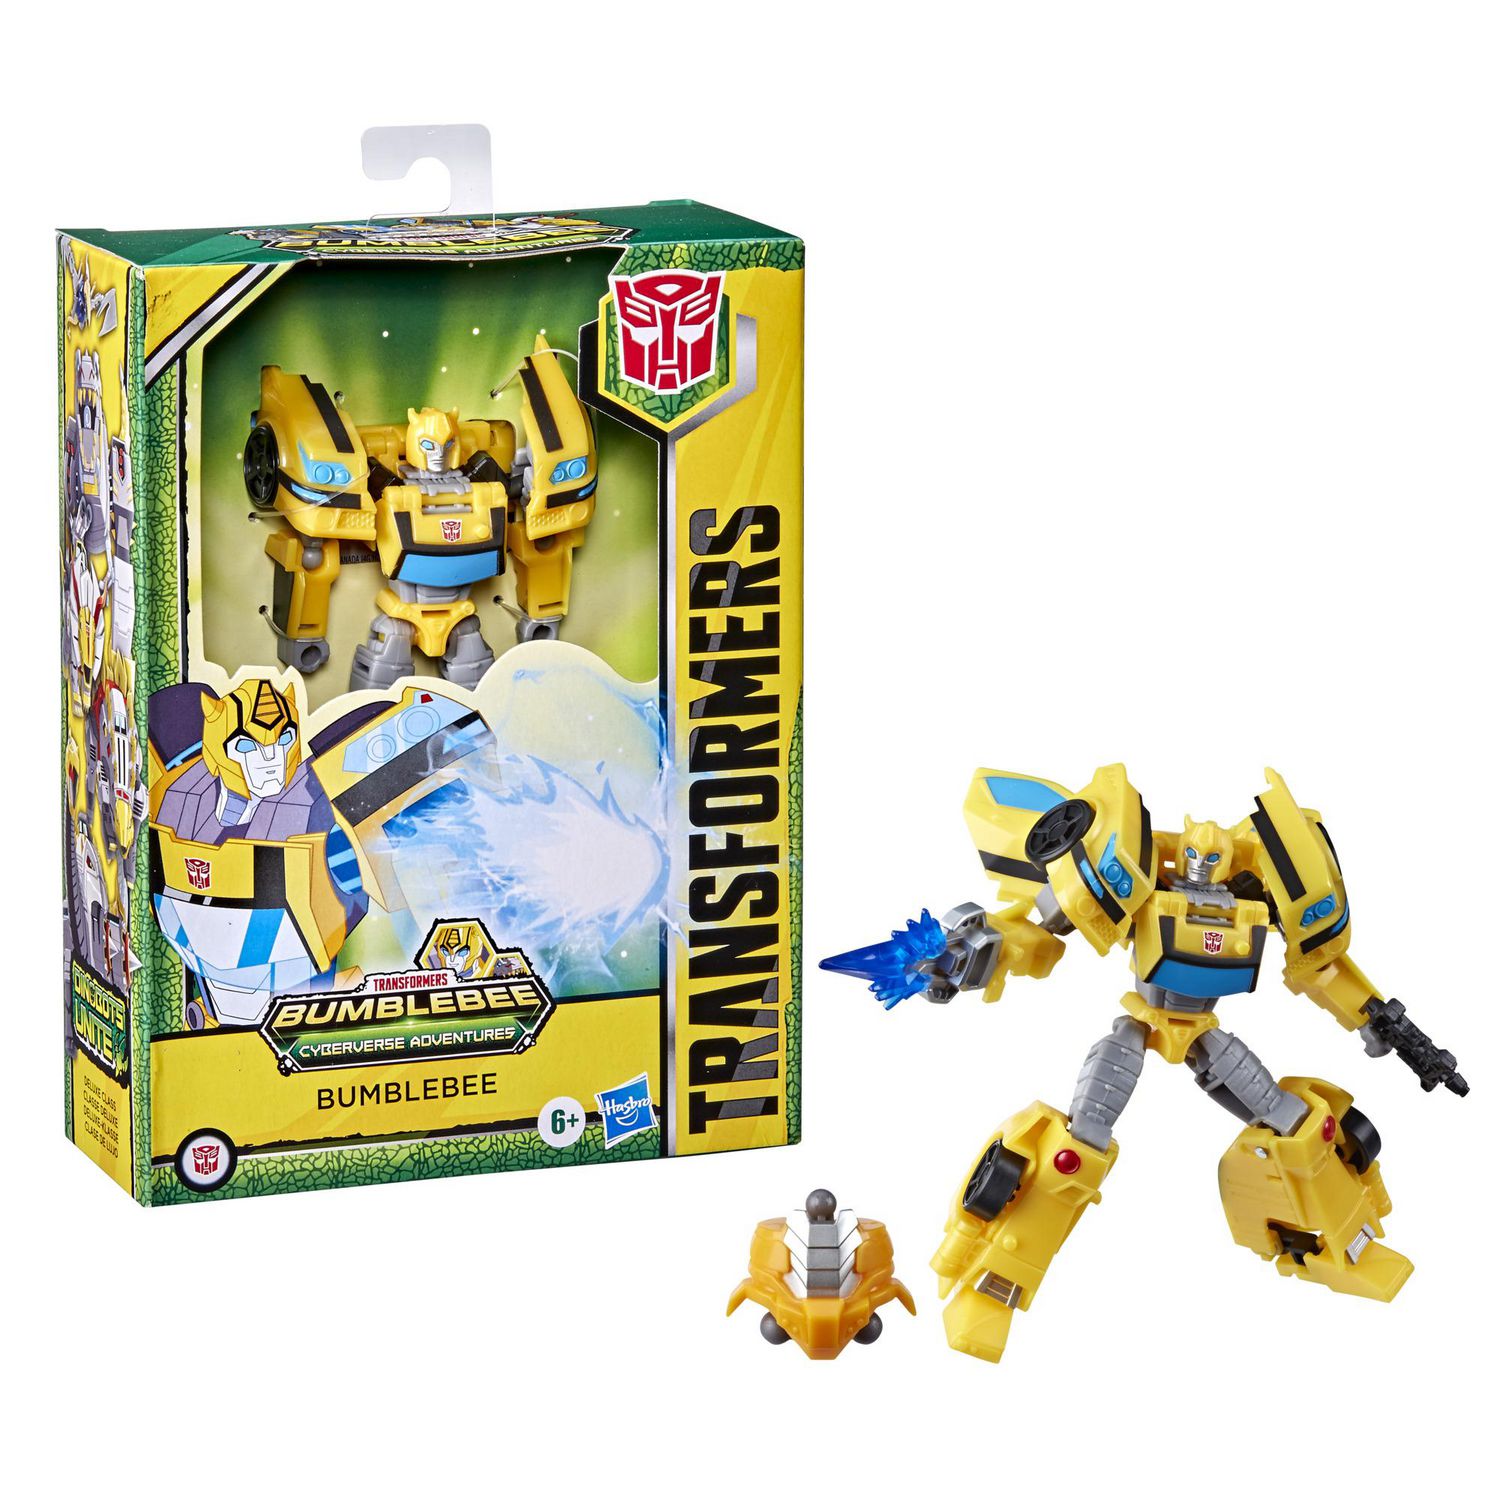 Transformers Bumblebee Cyberverse Adventures Toys Deluxe Class